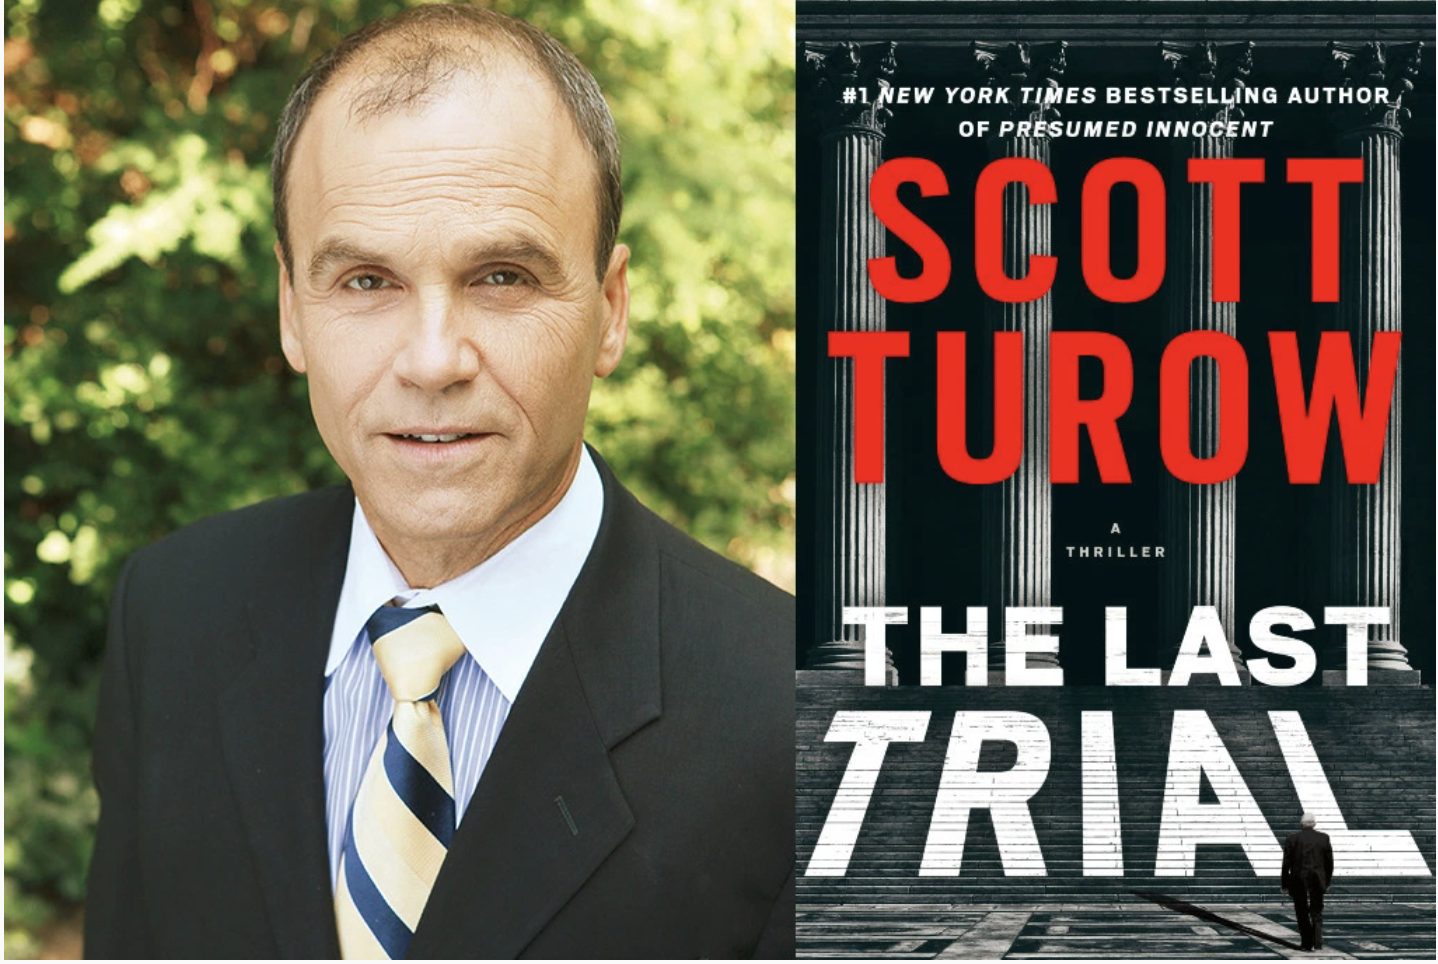 Best-selling author Scott Turow joins Tod Goldberg, Jean Hanff Korelitz on Bookish virtual salon